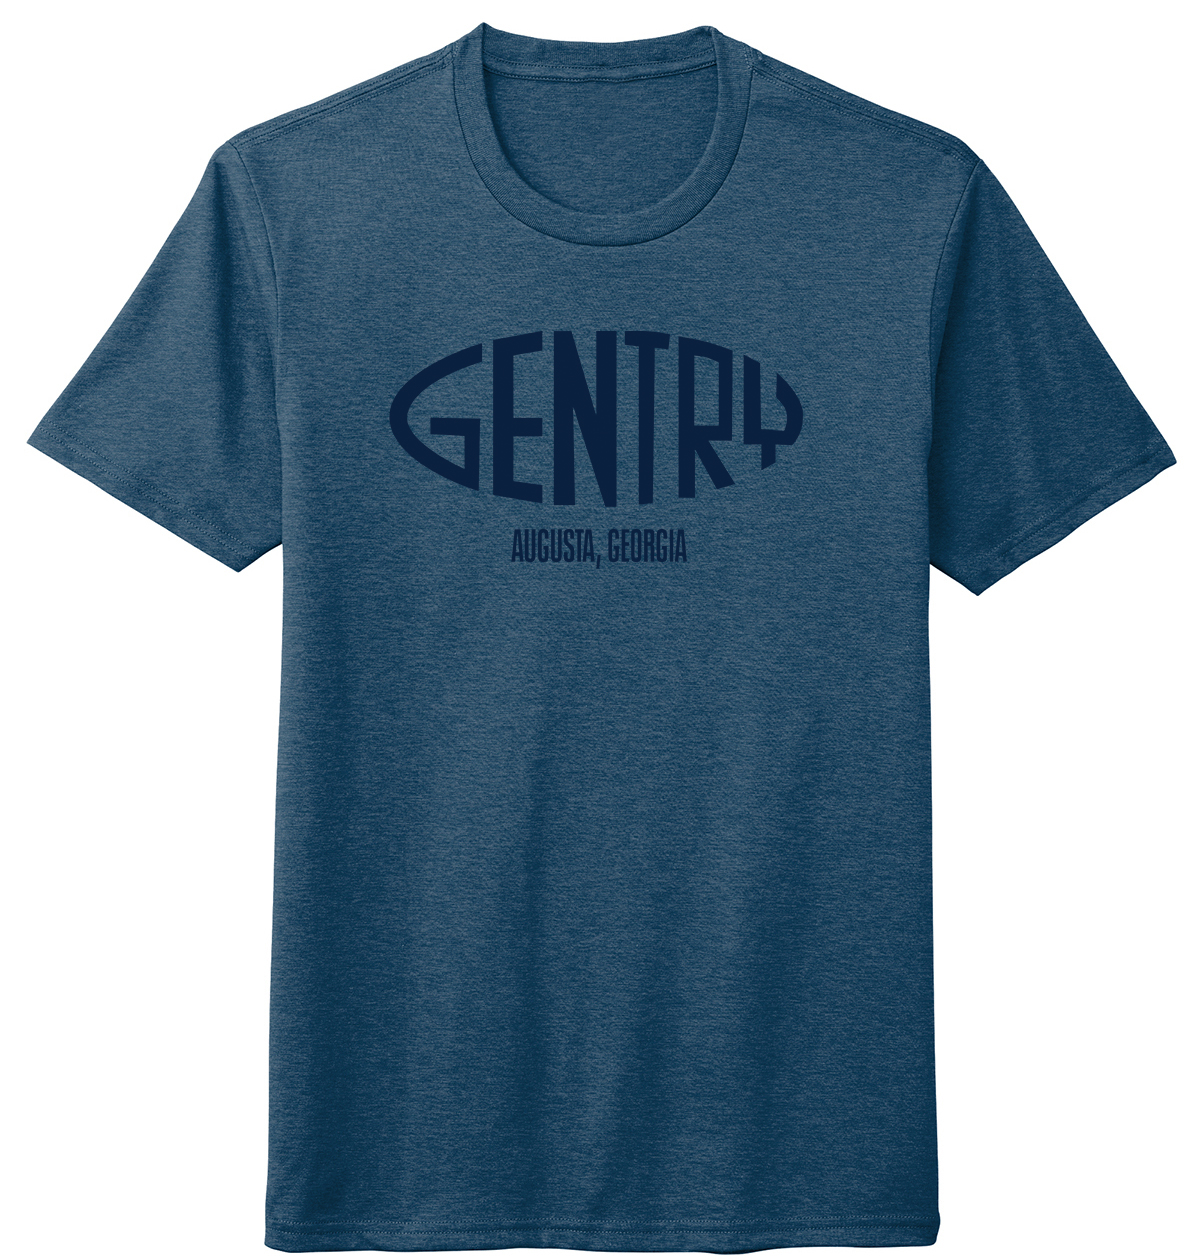 Gentry Men’s Shop - We Give a Shirt